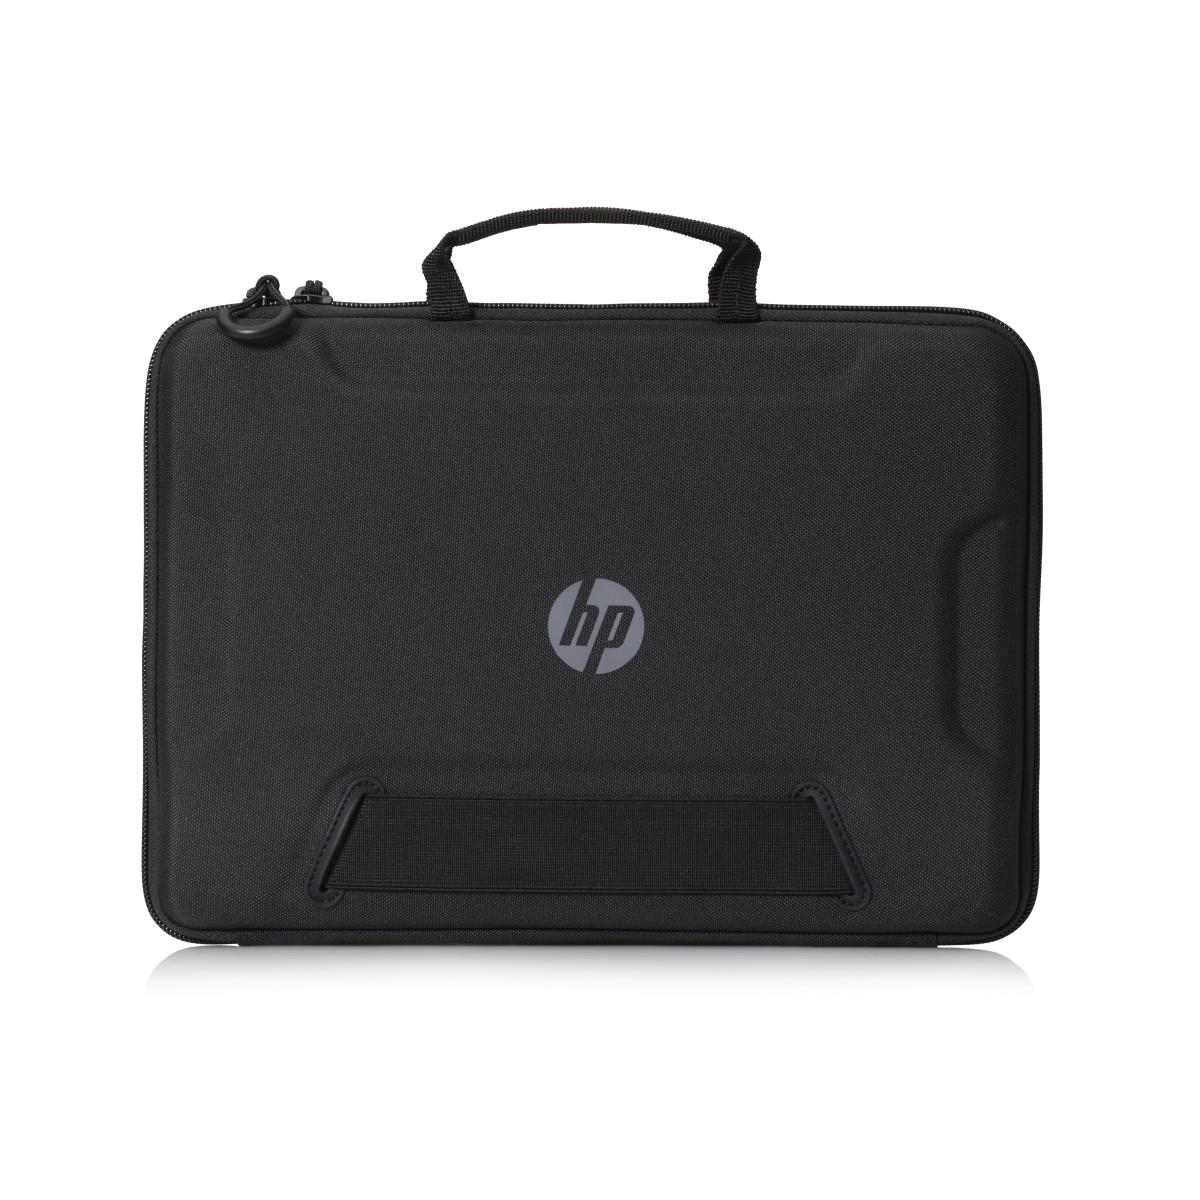 Pouzdro HP Black 11.6 Always On Case (2MY57AA)